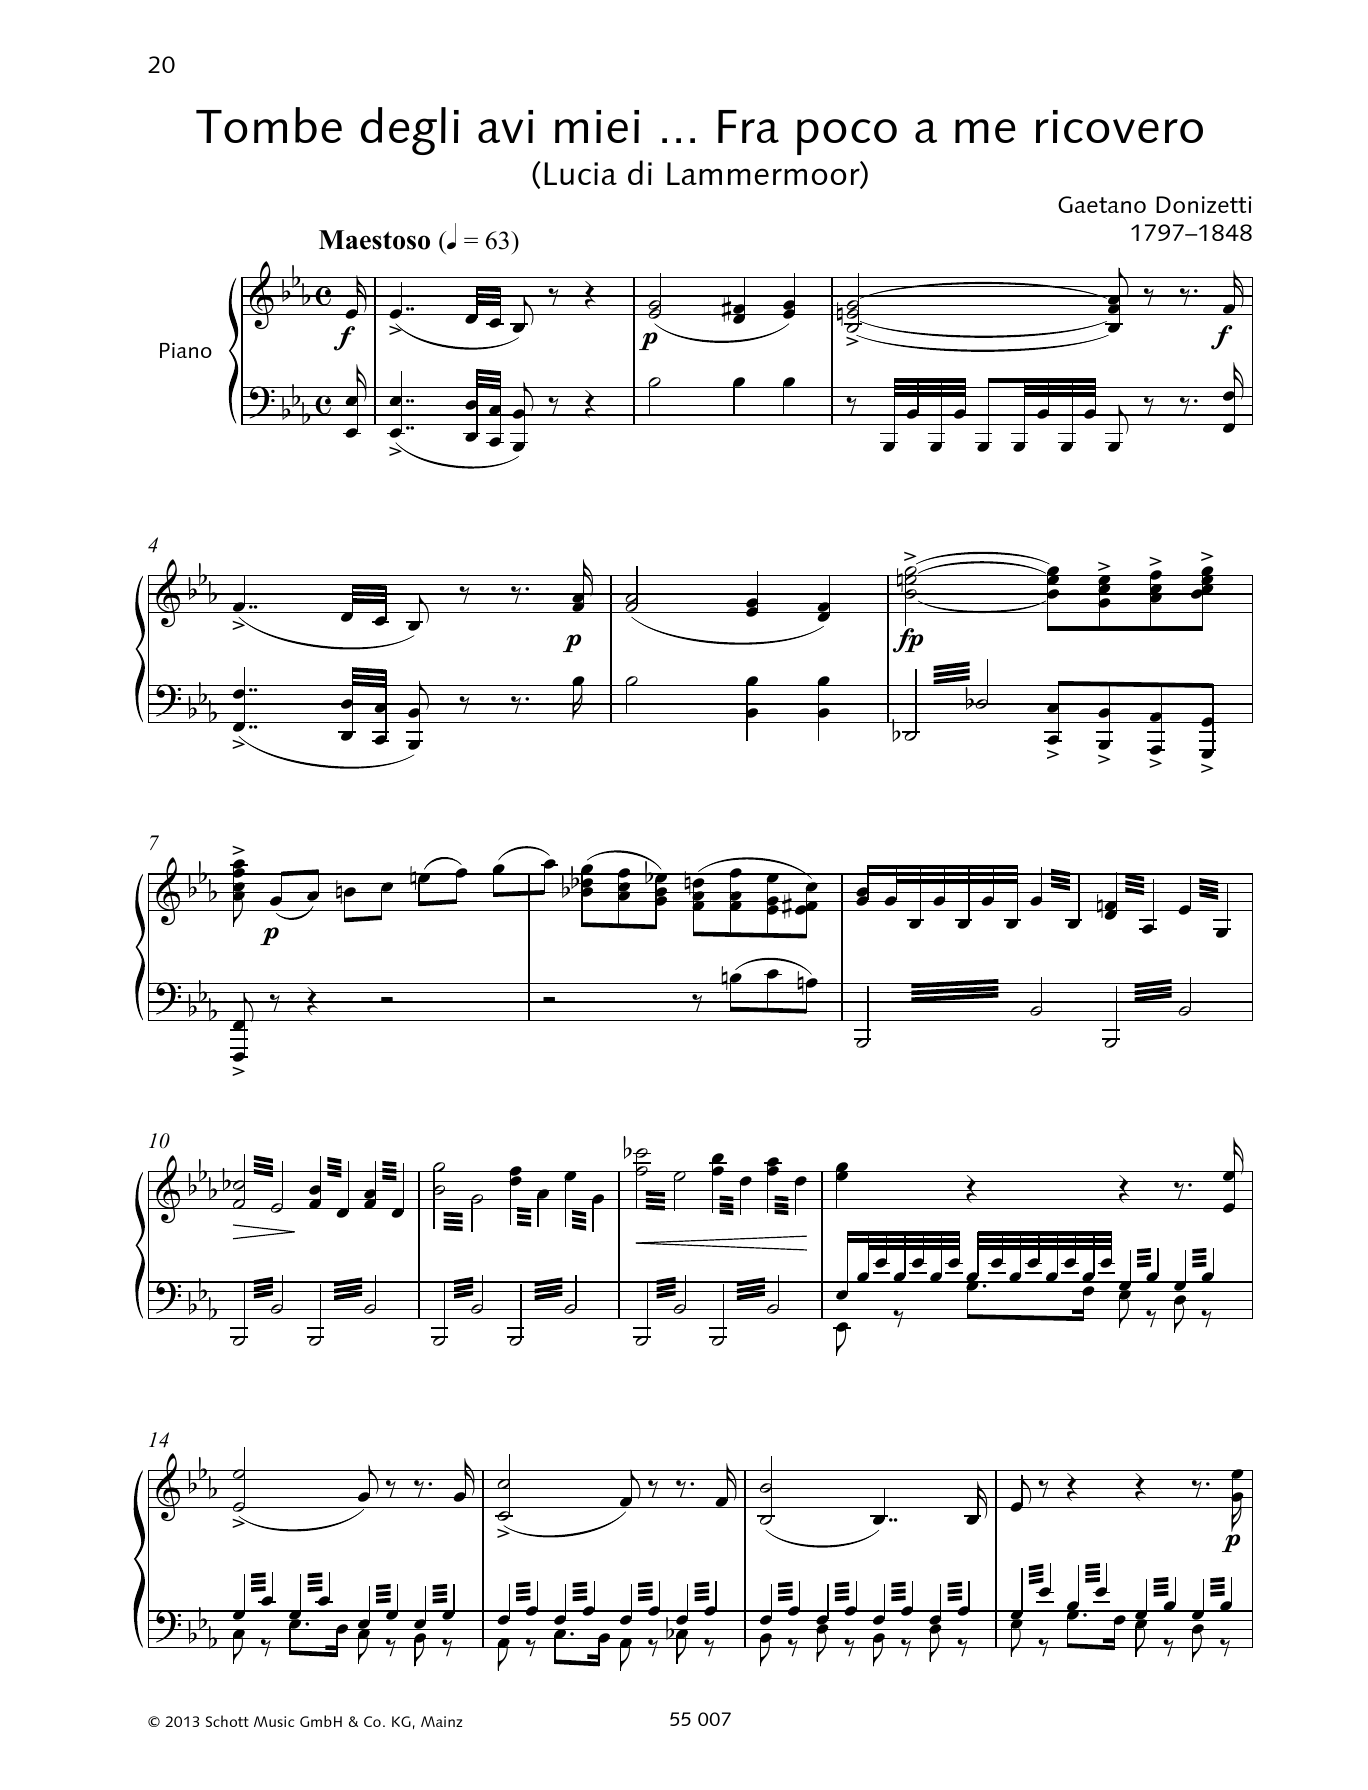 Download Francesca Licciarda Tombe degli avi miei Sheet Music and learn how to play Piano & Vocal PDF digital score in minutes